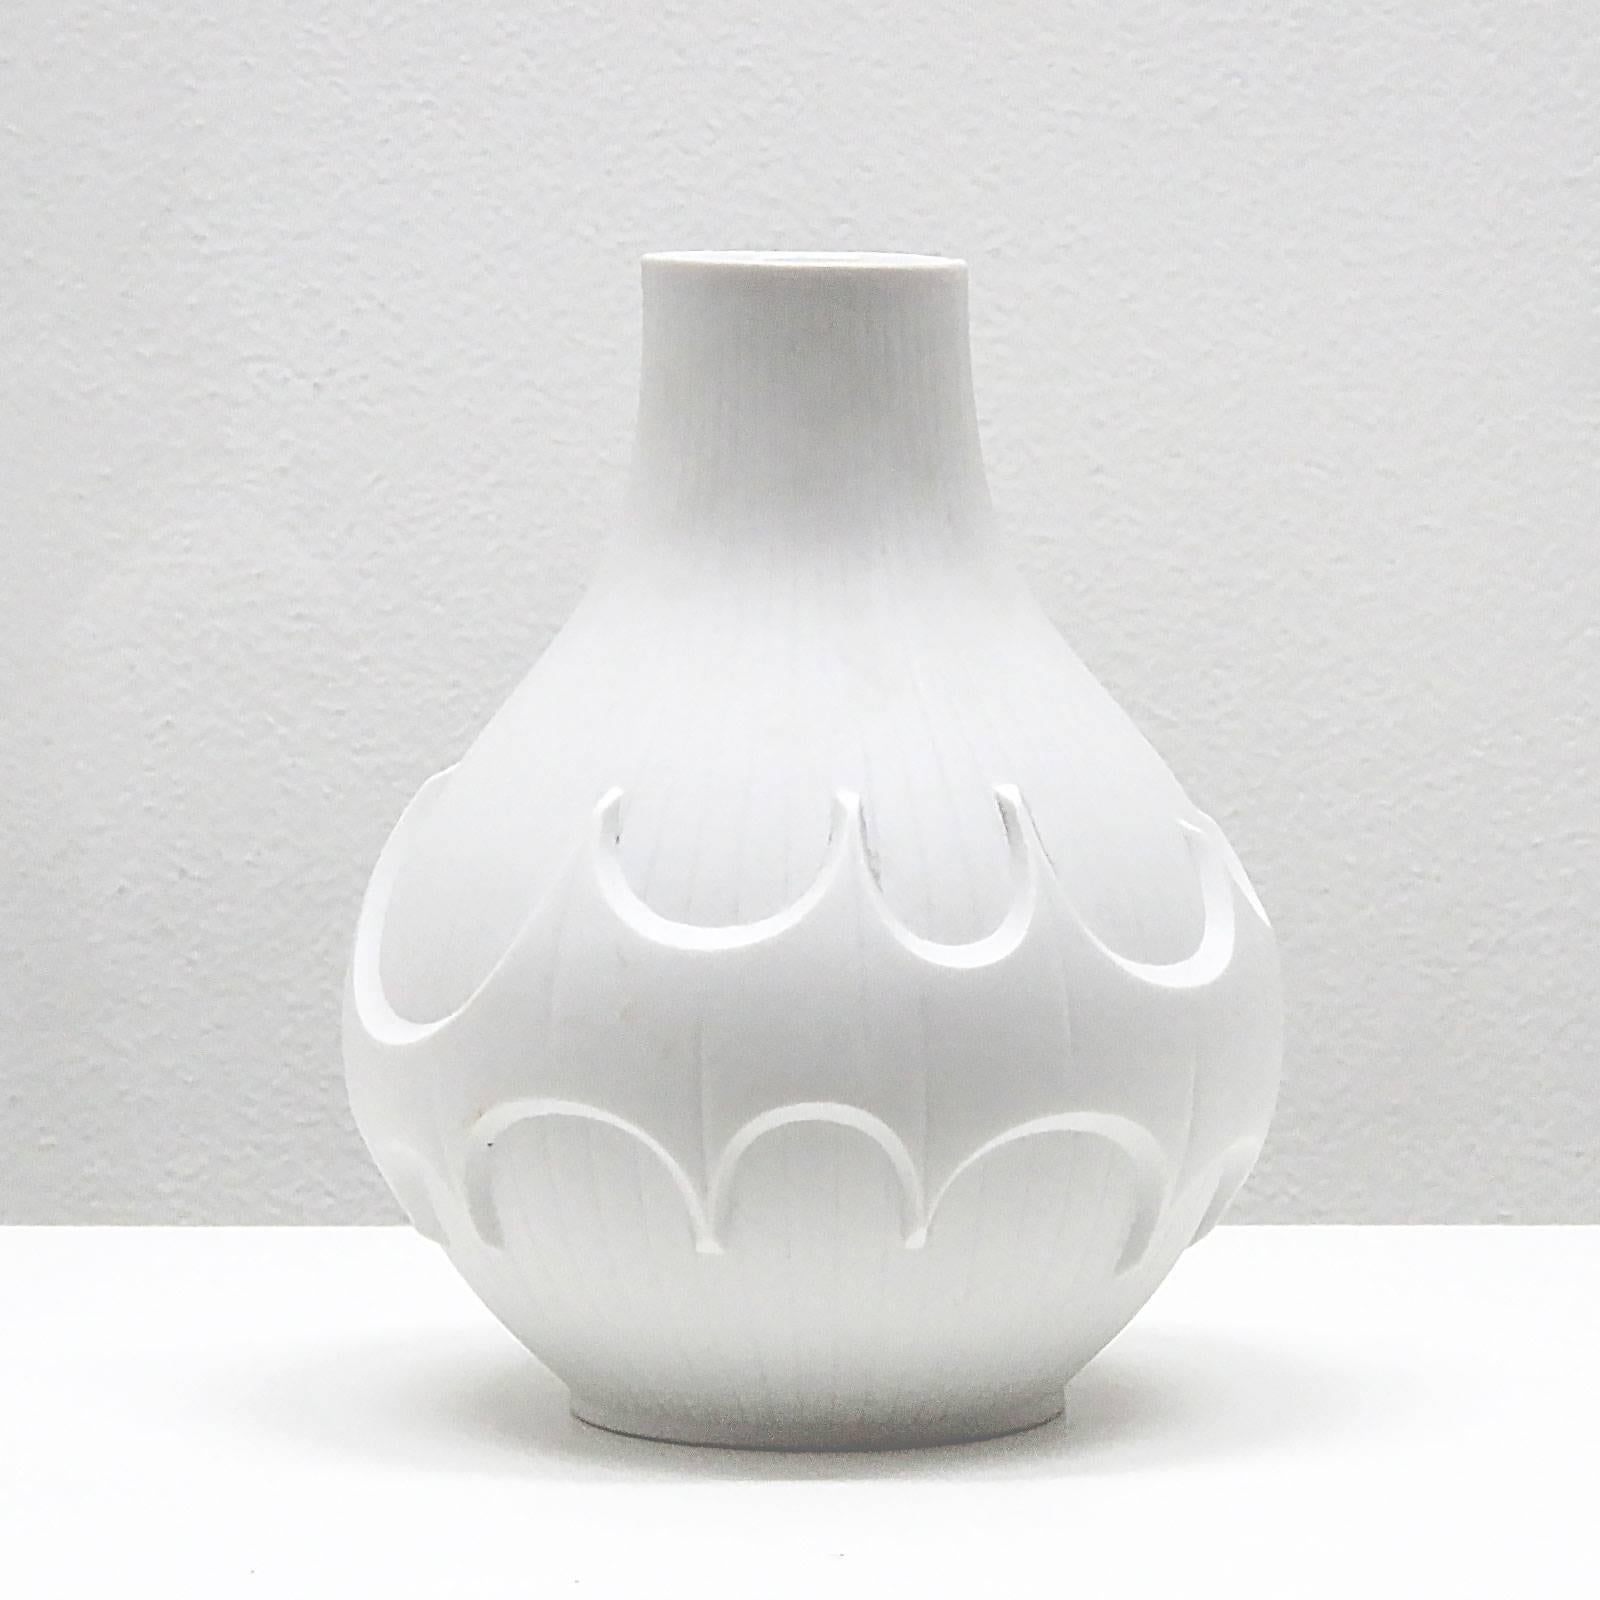 Amazing Op-Art relief white bisque porcelain vase by Werner Uhl for Scherzer, Bavaria, Germany with 